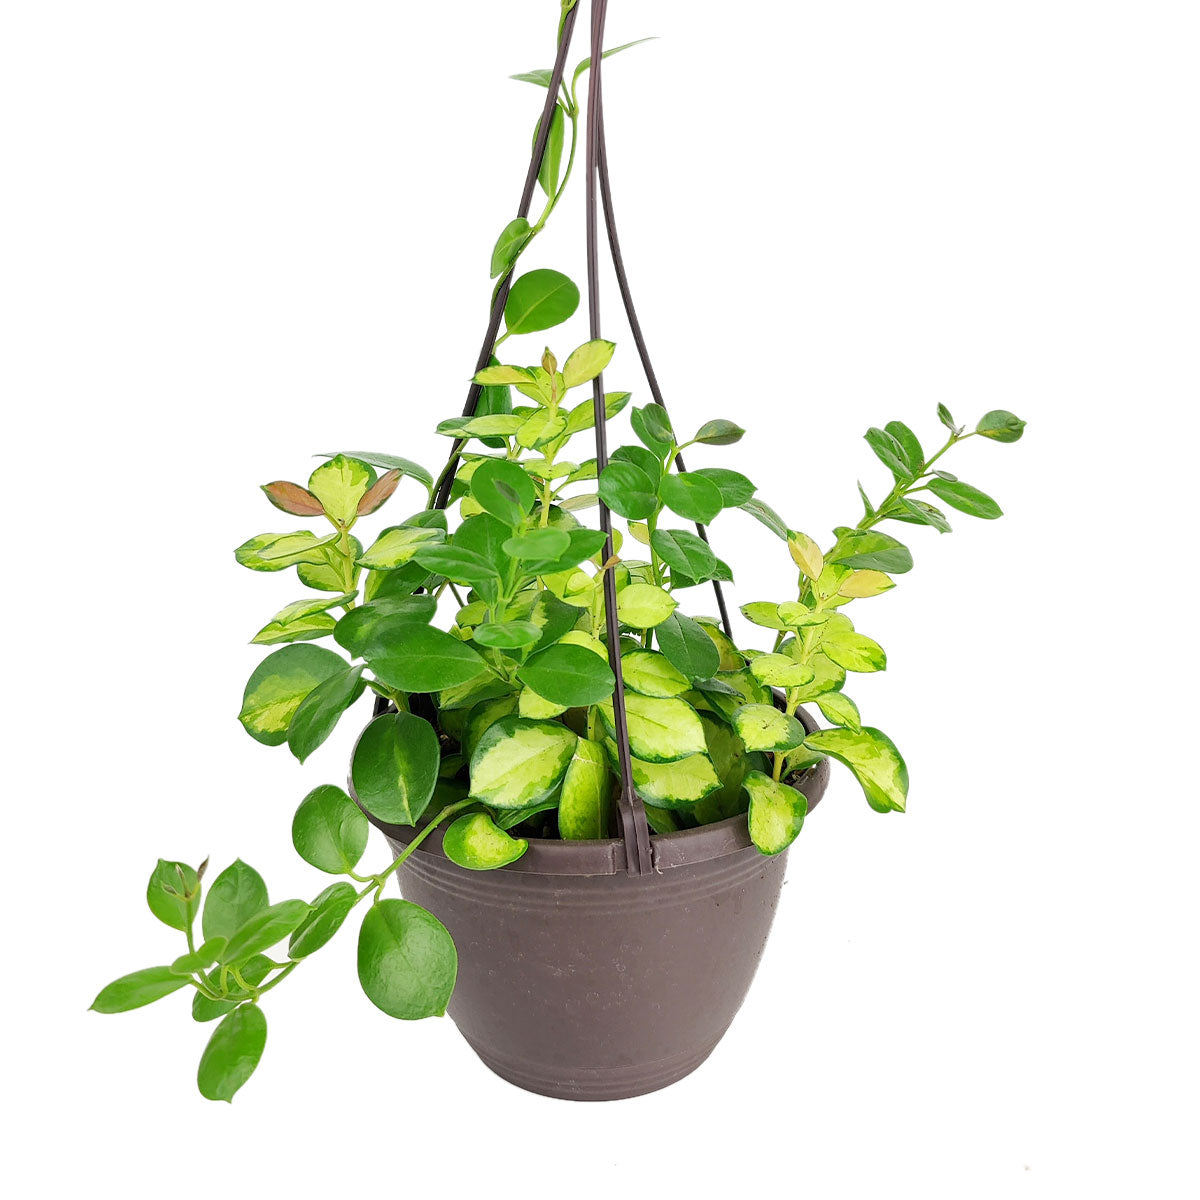 Hoya Australis Lisa, variegated Hoya, Hoya Lisa in a hanging basket, trailing houseplant